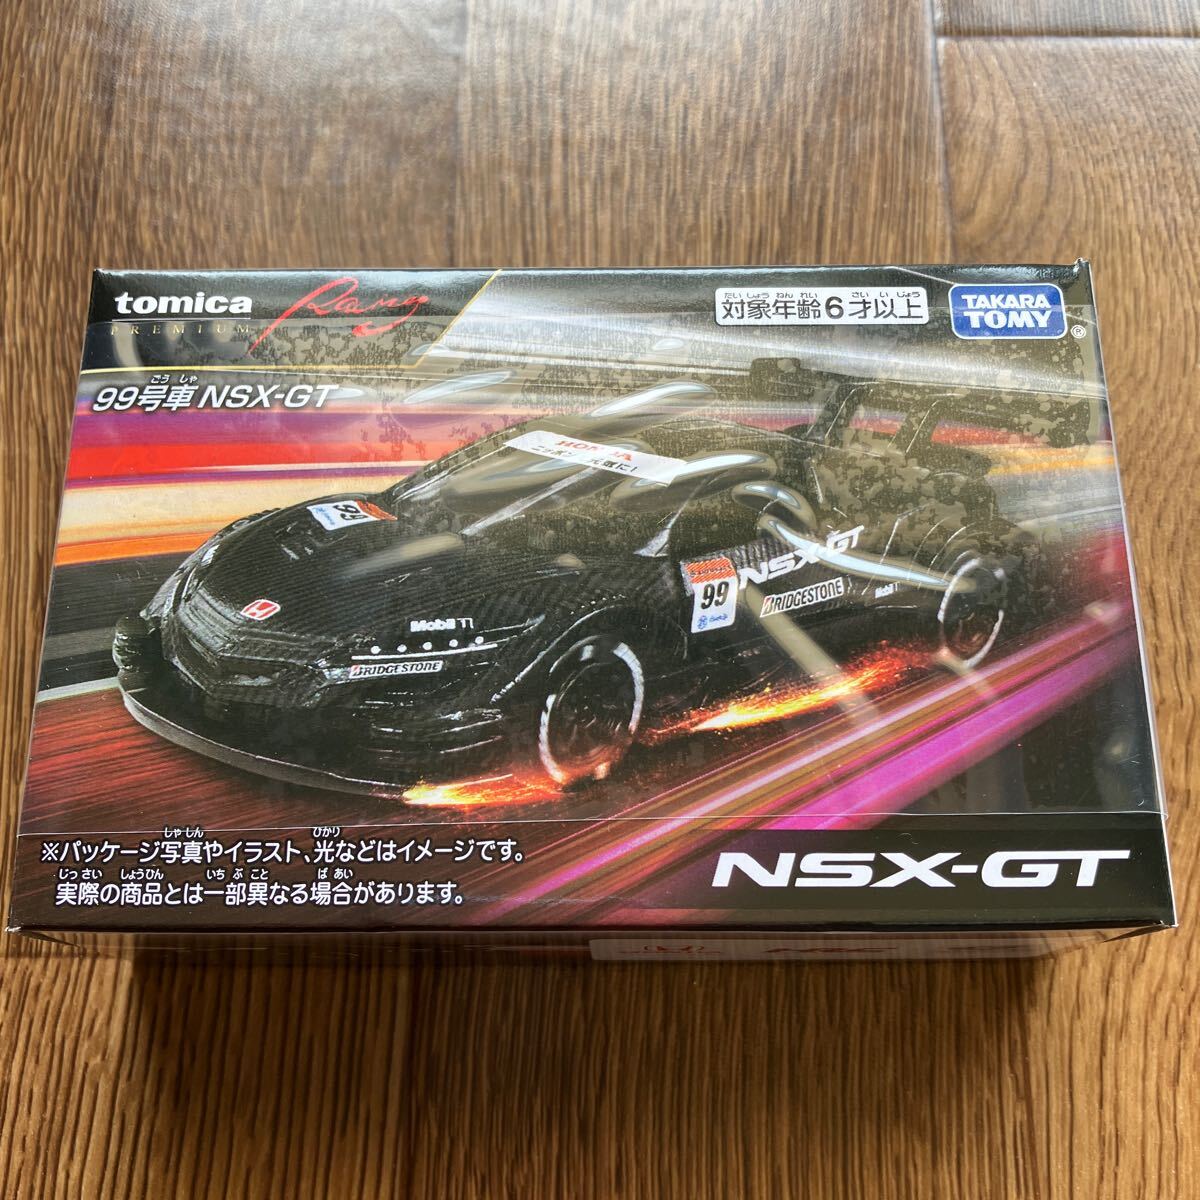 tomica トミカ プレミアム 99号車 NSX-GT レーシング Racing スーパーGT 未使用 新品の画像1